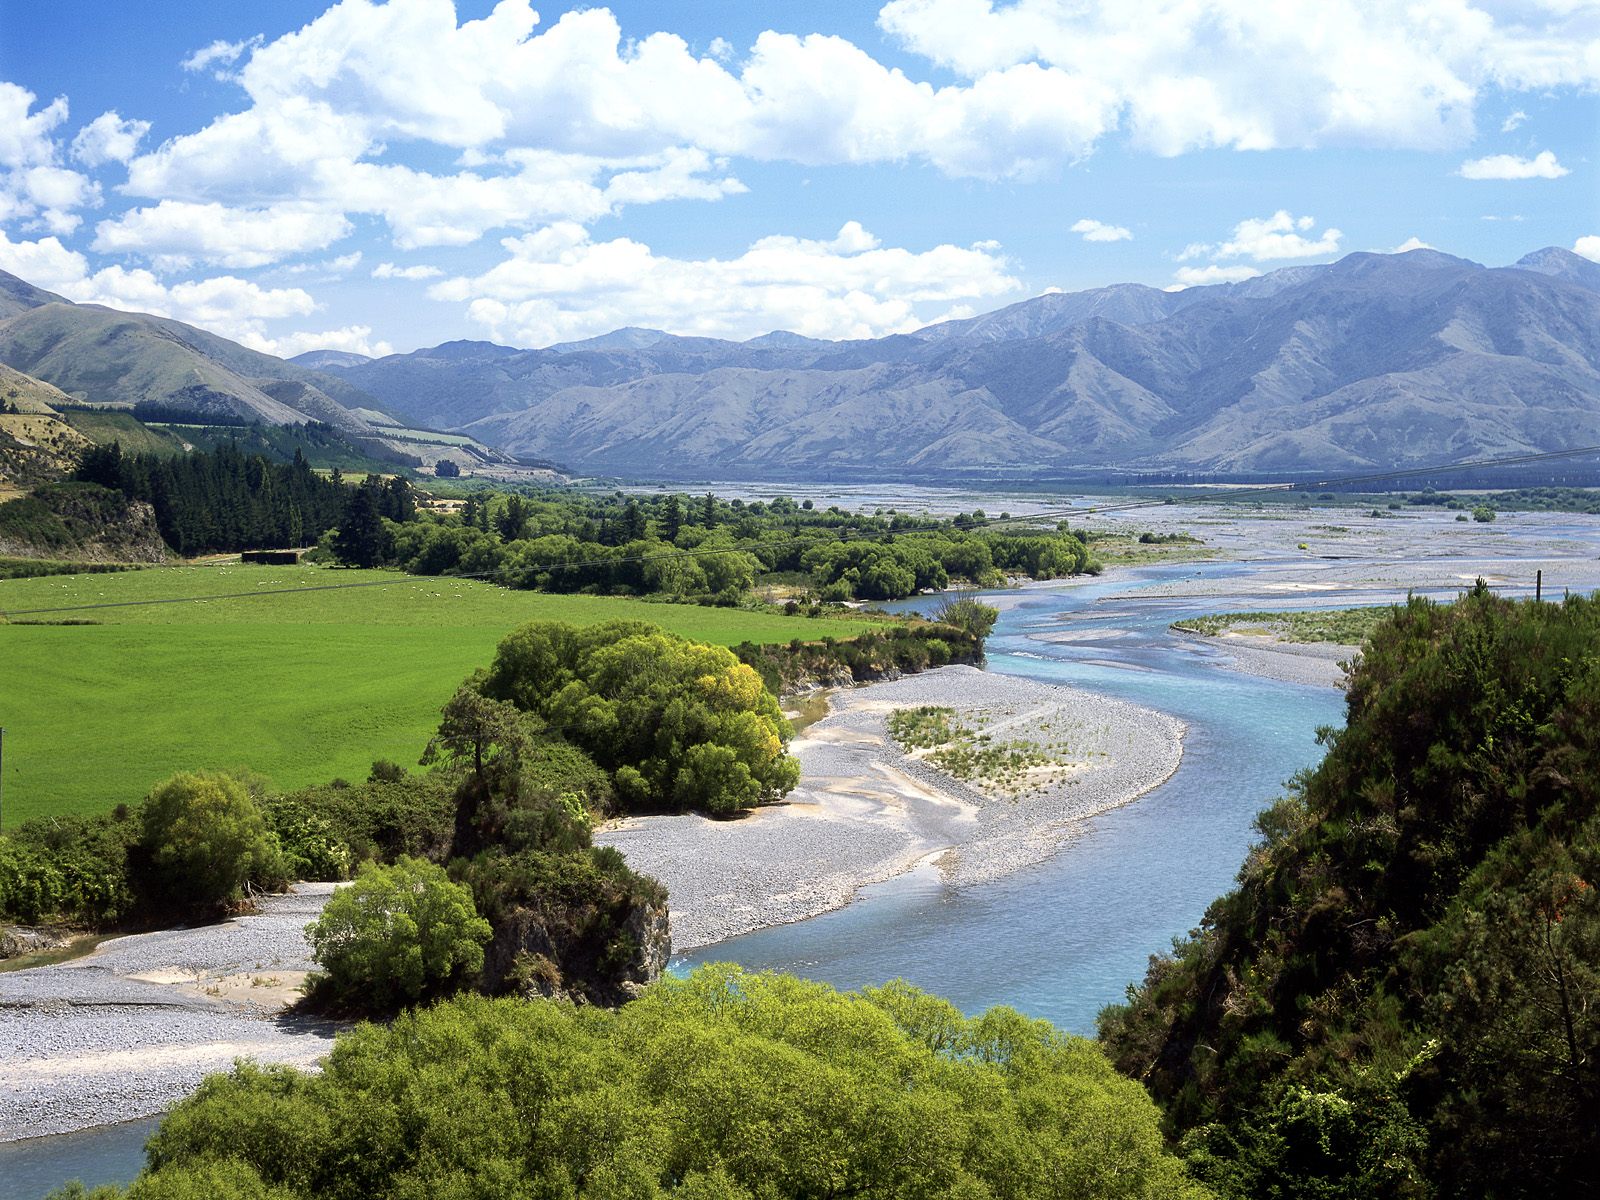 Free HQ Waiau River New Zealand Wallpaper   Free HQ Wallpapers